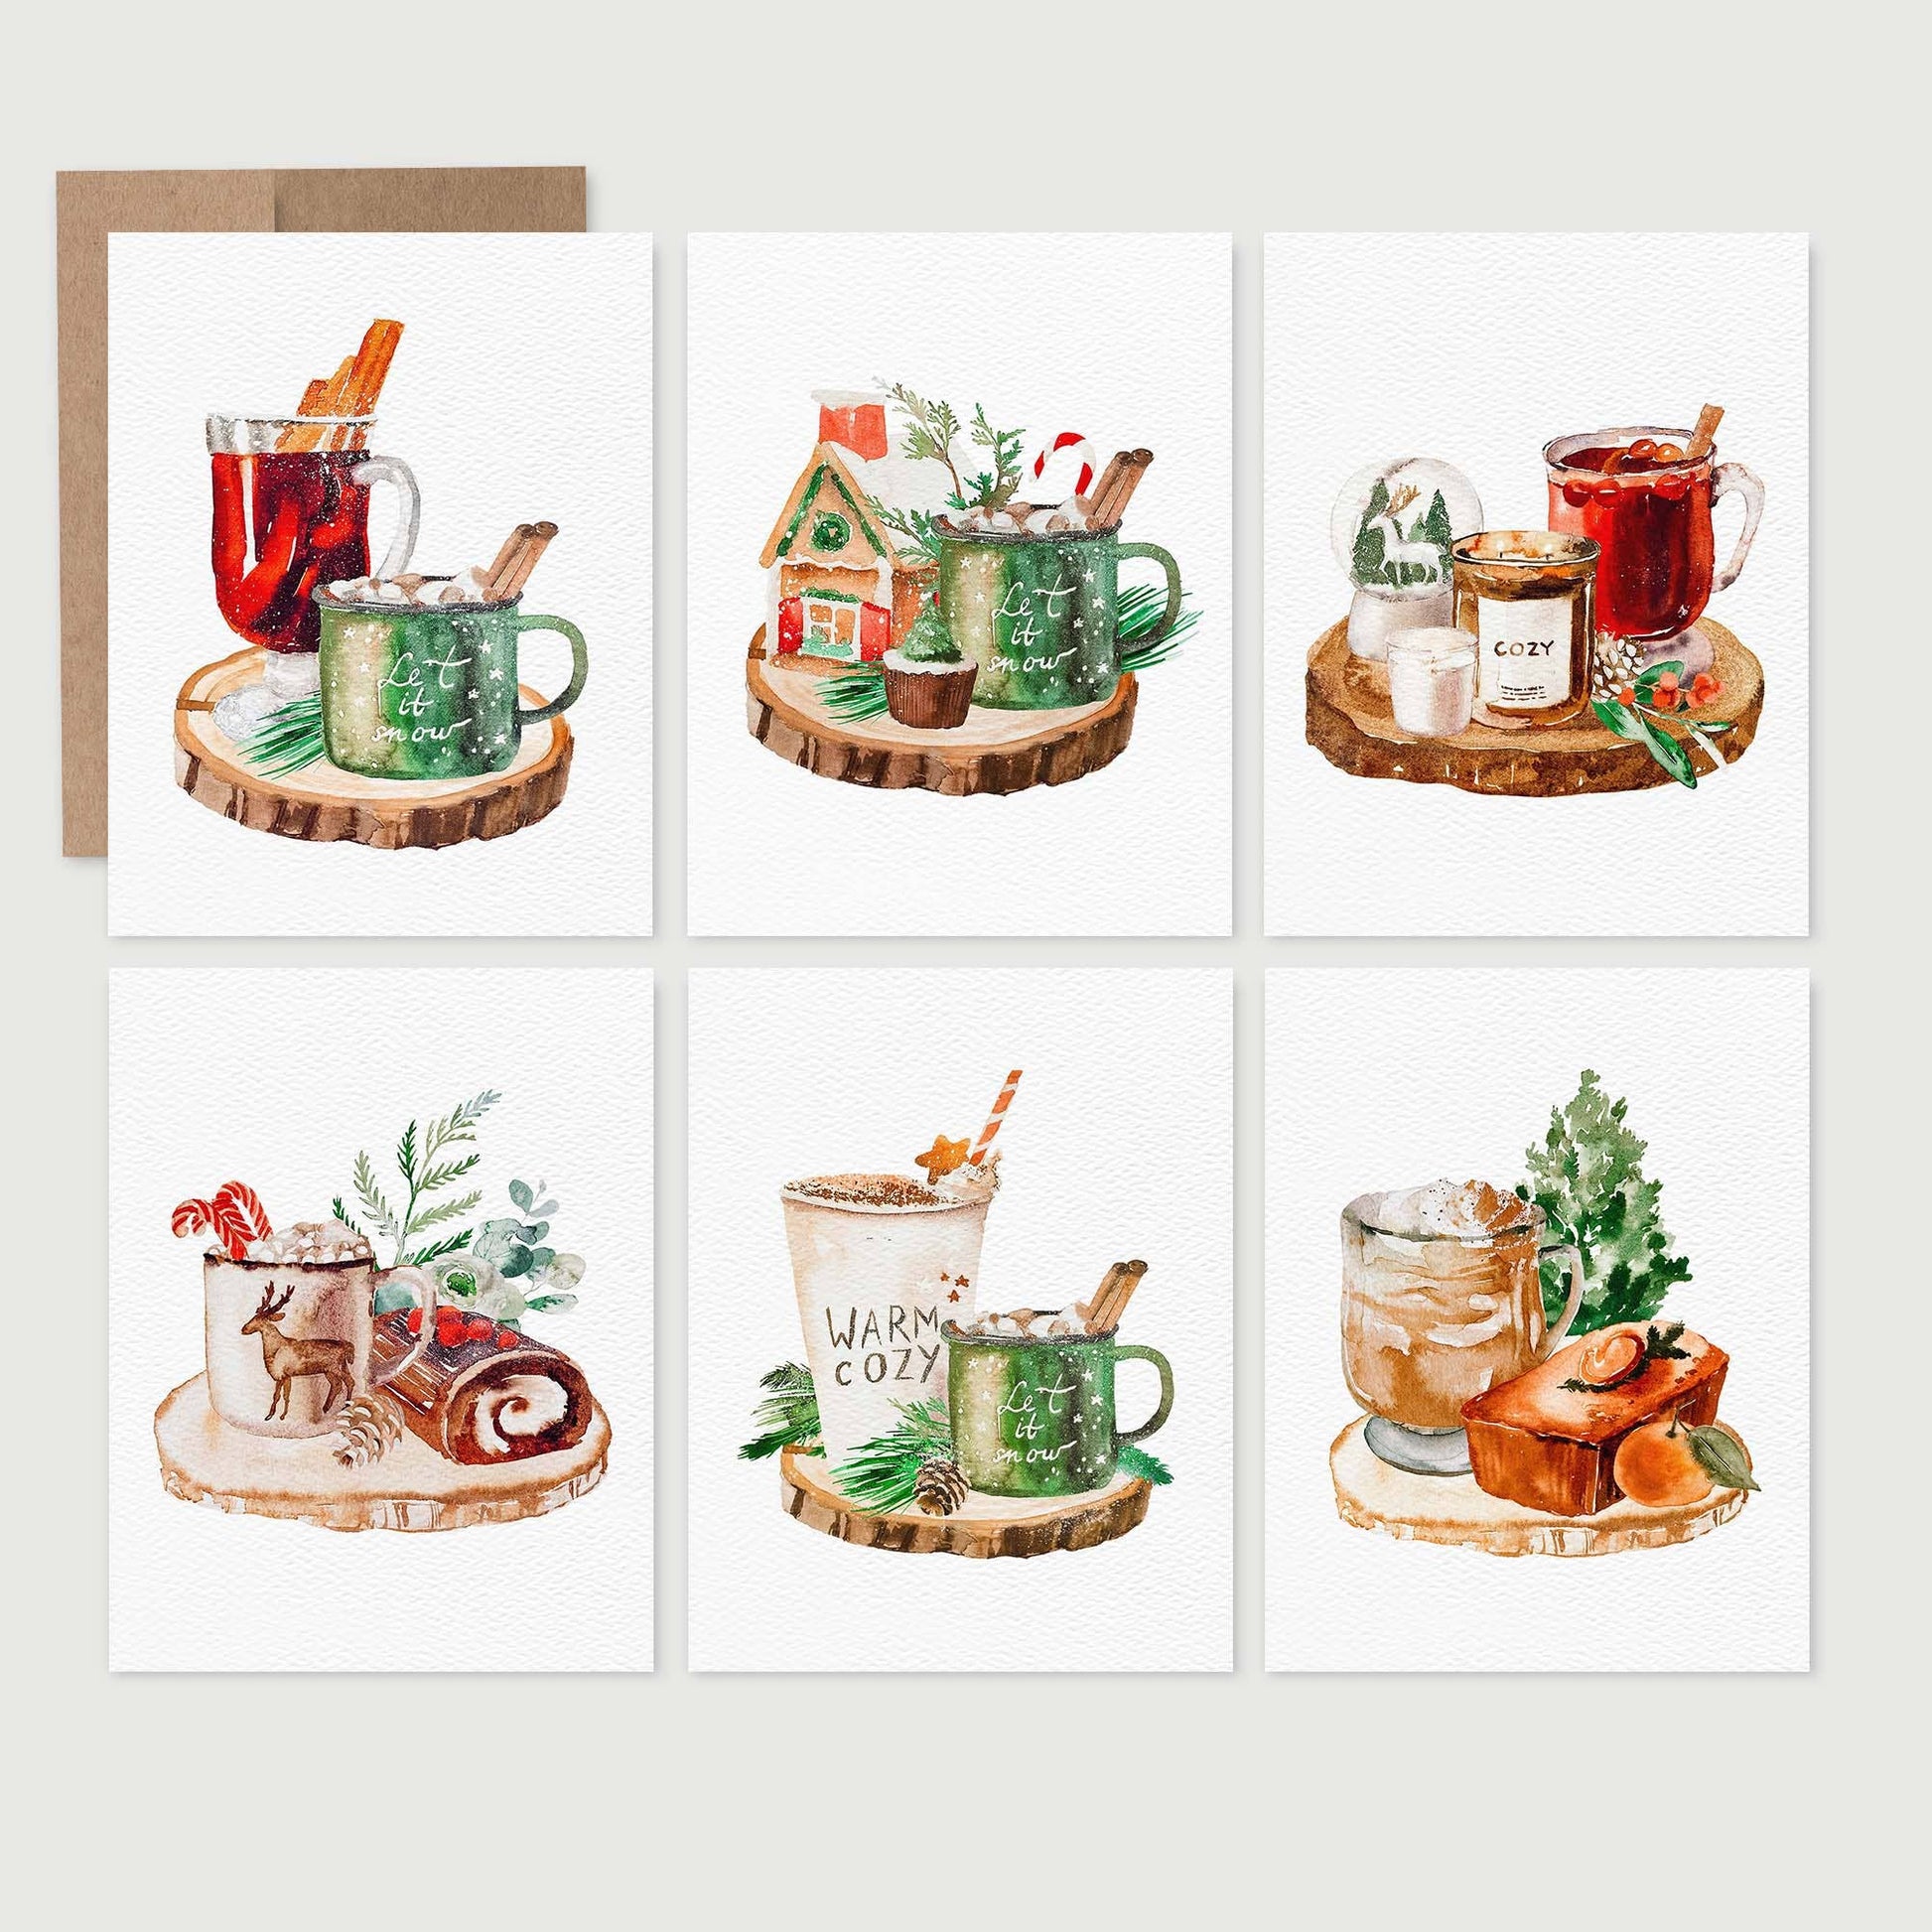 Six card designs of cozy Christmas treats